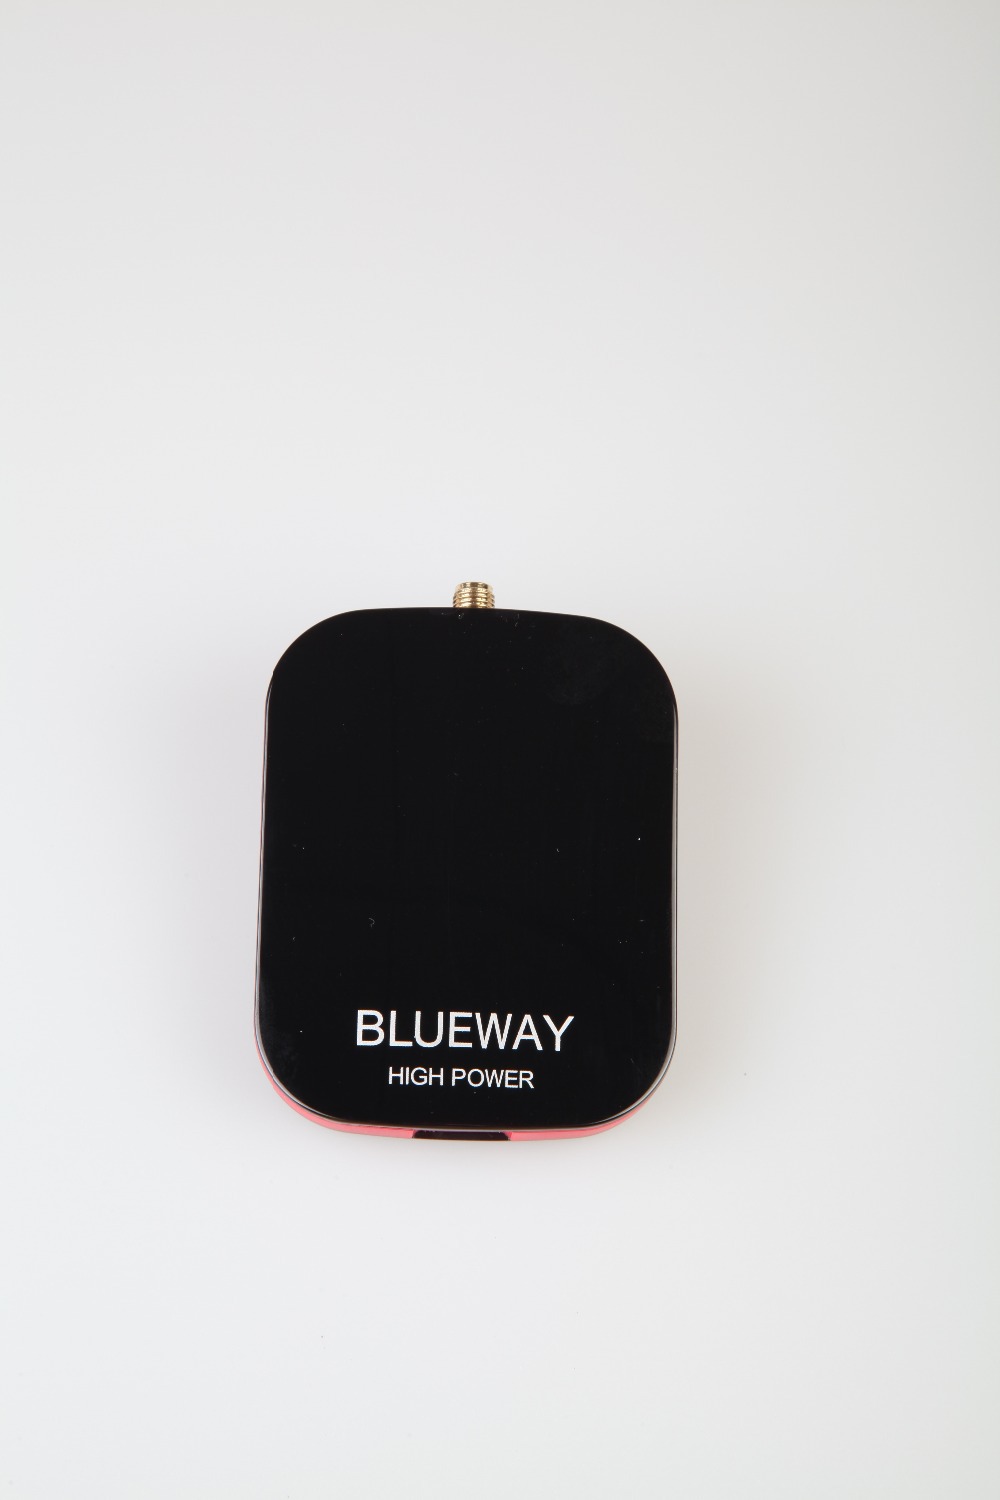 2015   1000    150  N9000 Blueway RT3070  usb-wi-fi      58dbi